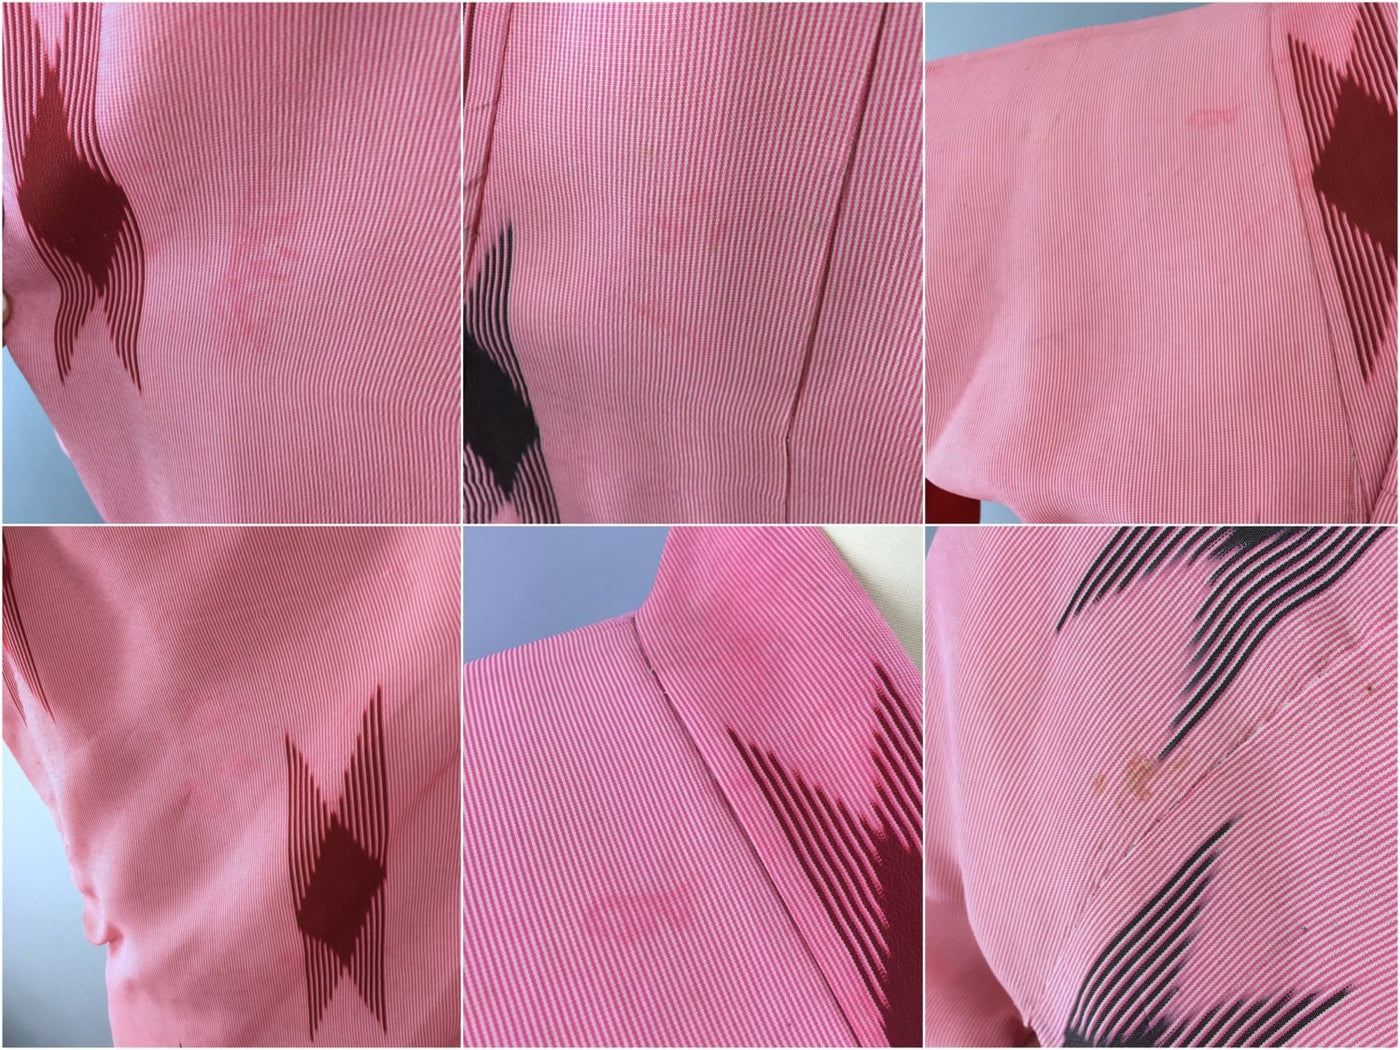 1950s Vintage Kimono Robe with Pink Geometric Ikat Print - ThisBlueBird